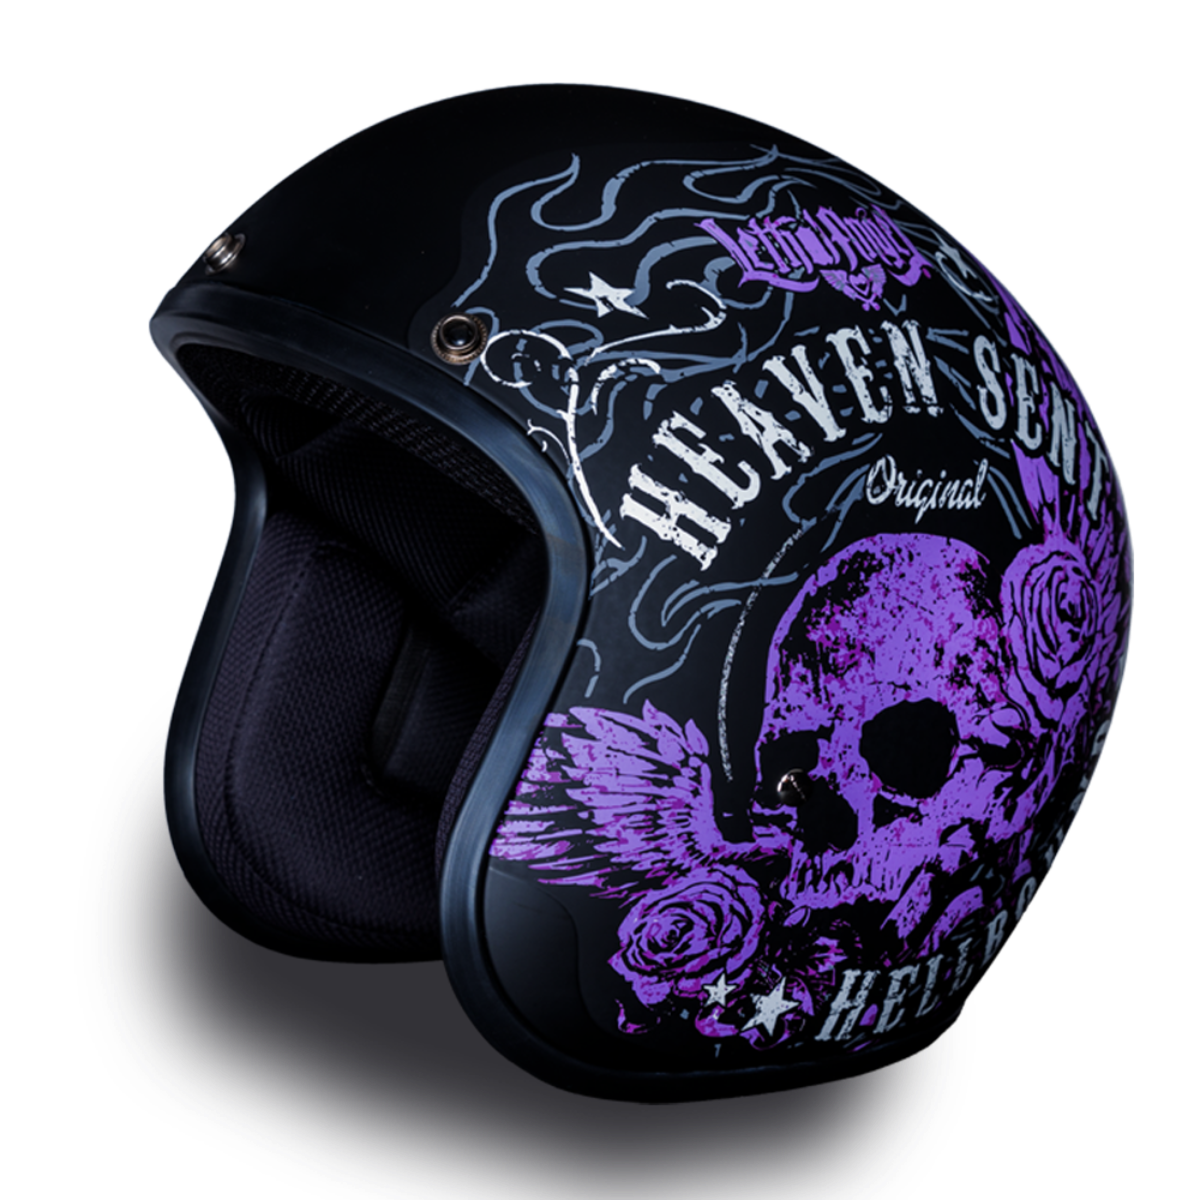 Daytona D.O.T. Cruiser w/ Heaven Sent Motorcycle Open Face 3/4 Shell Helmet